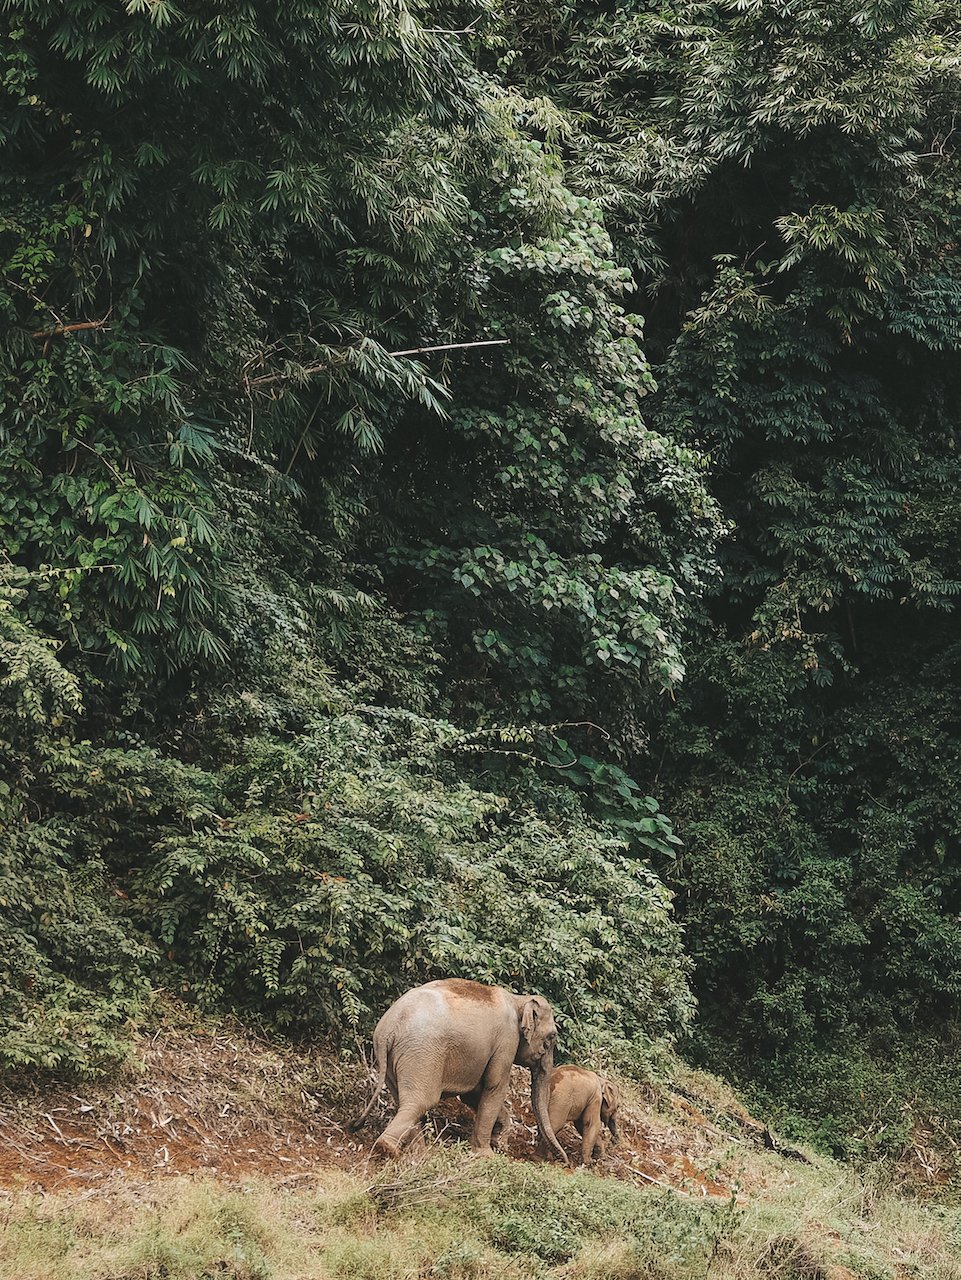 Elephants in the jungle - Khao Sok National Park - Thailand